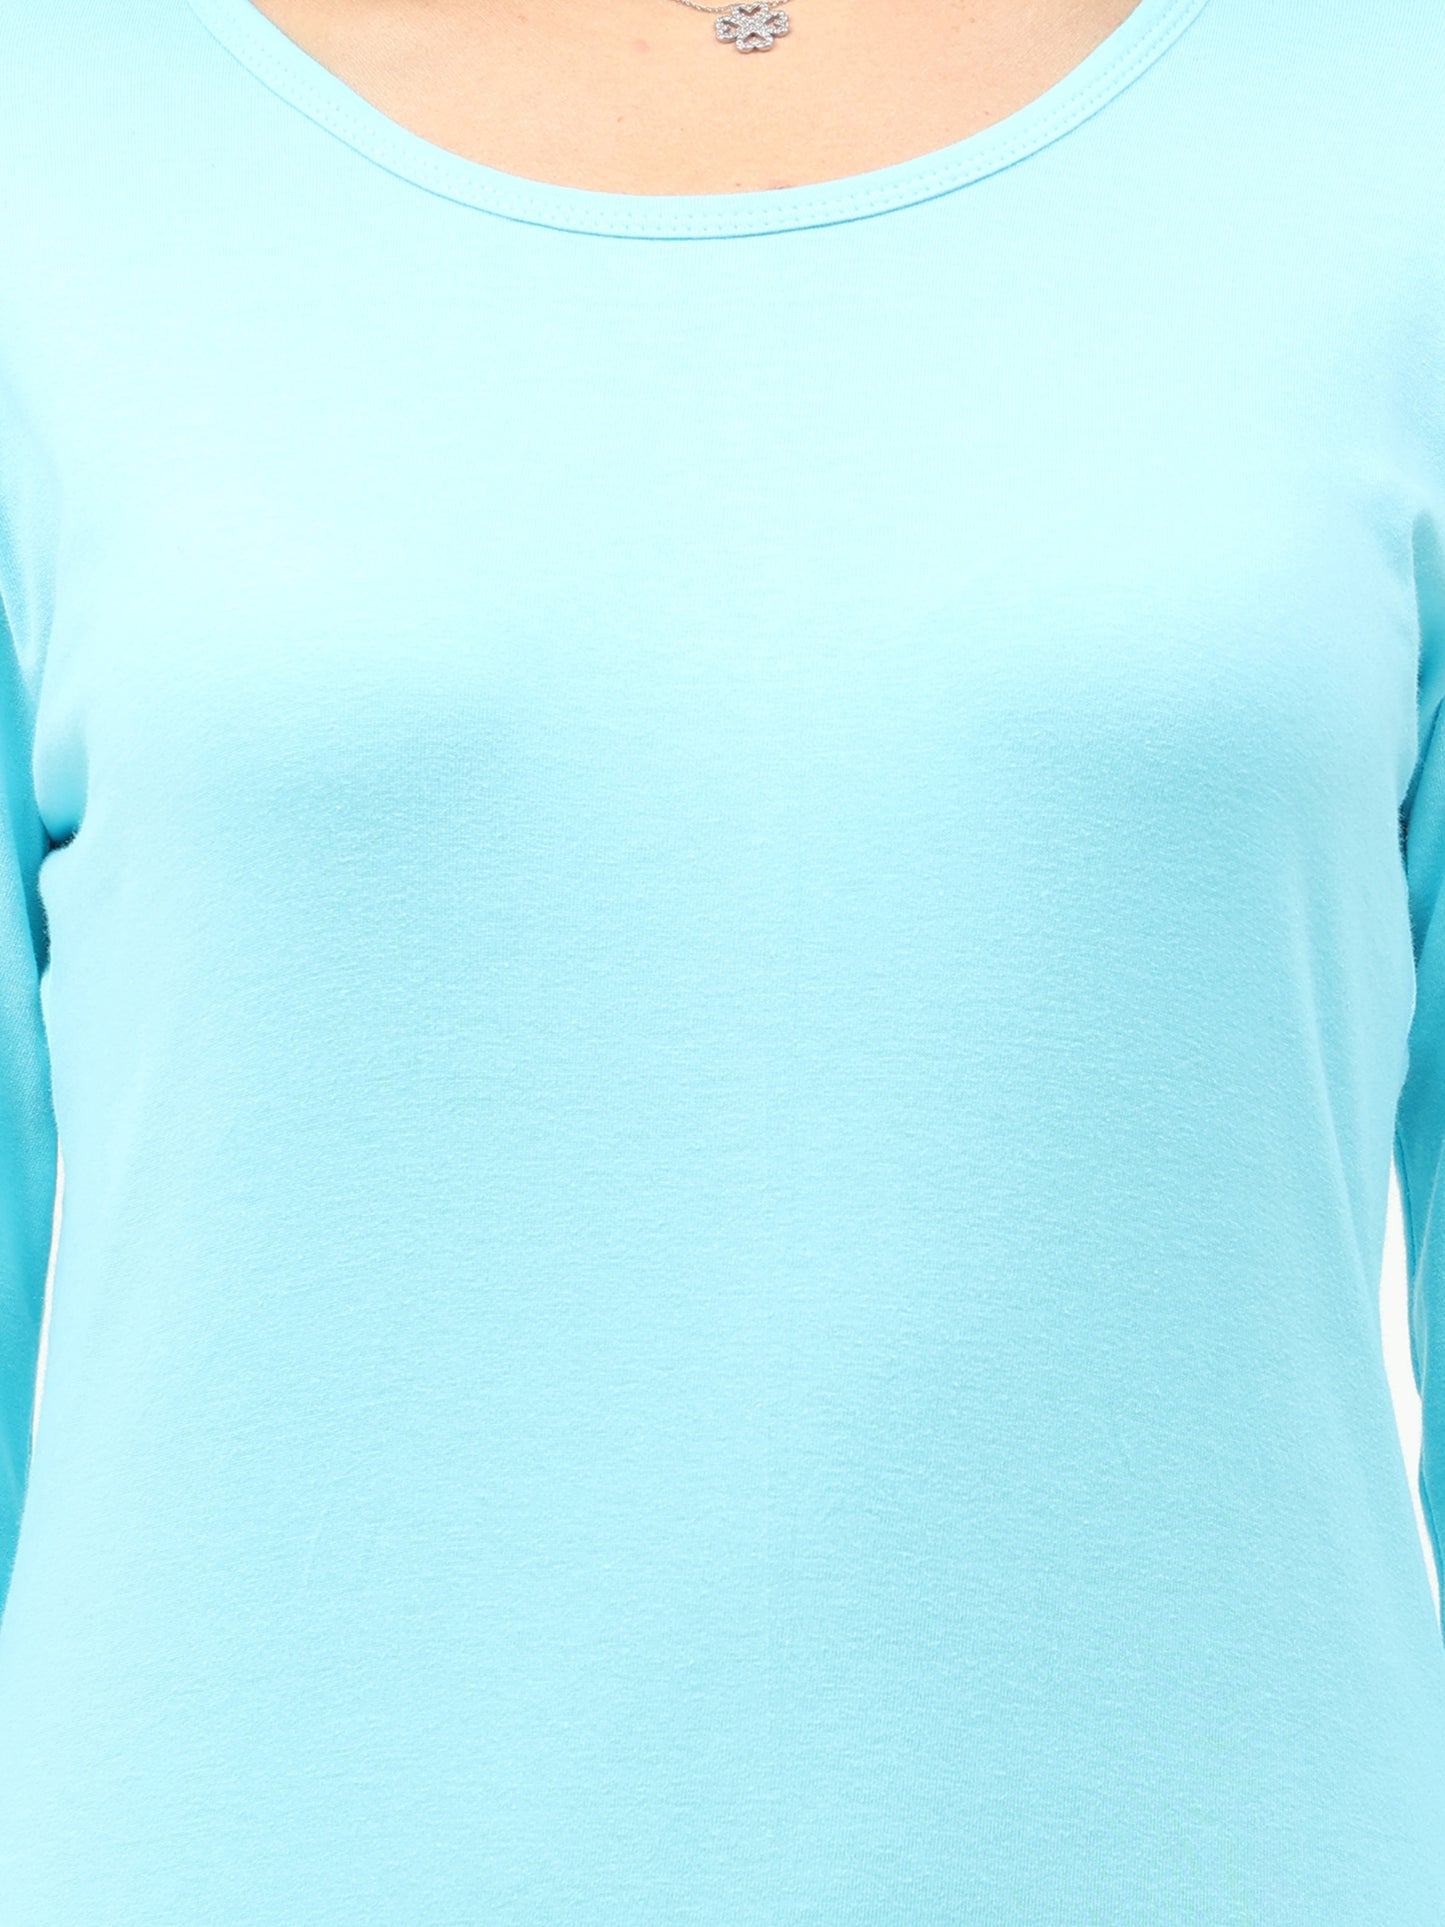 Women's Cotton Plain Round Neck Full Sleeve Sky Blue Color T-Shirt